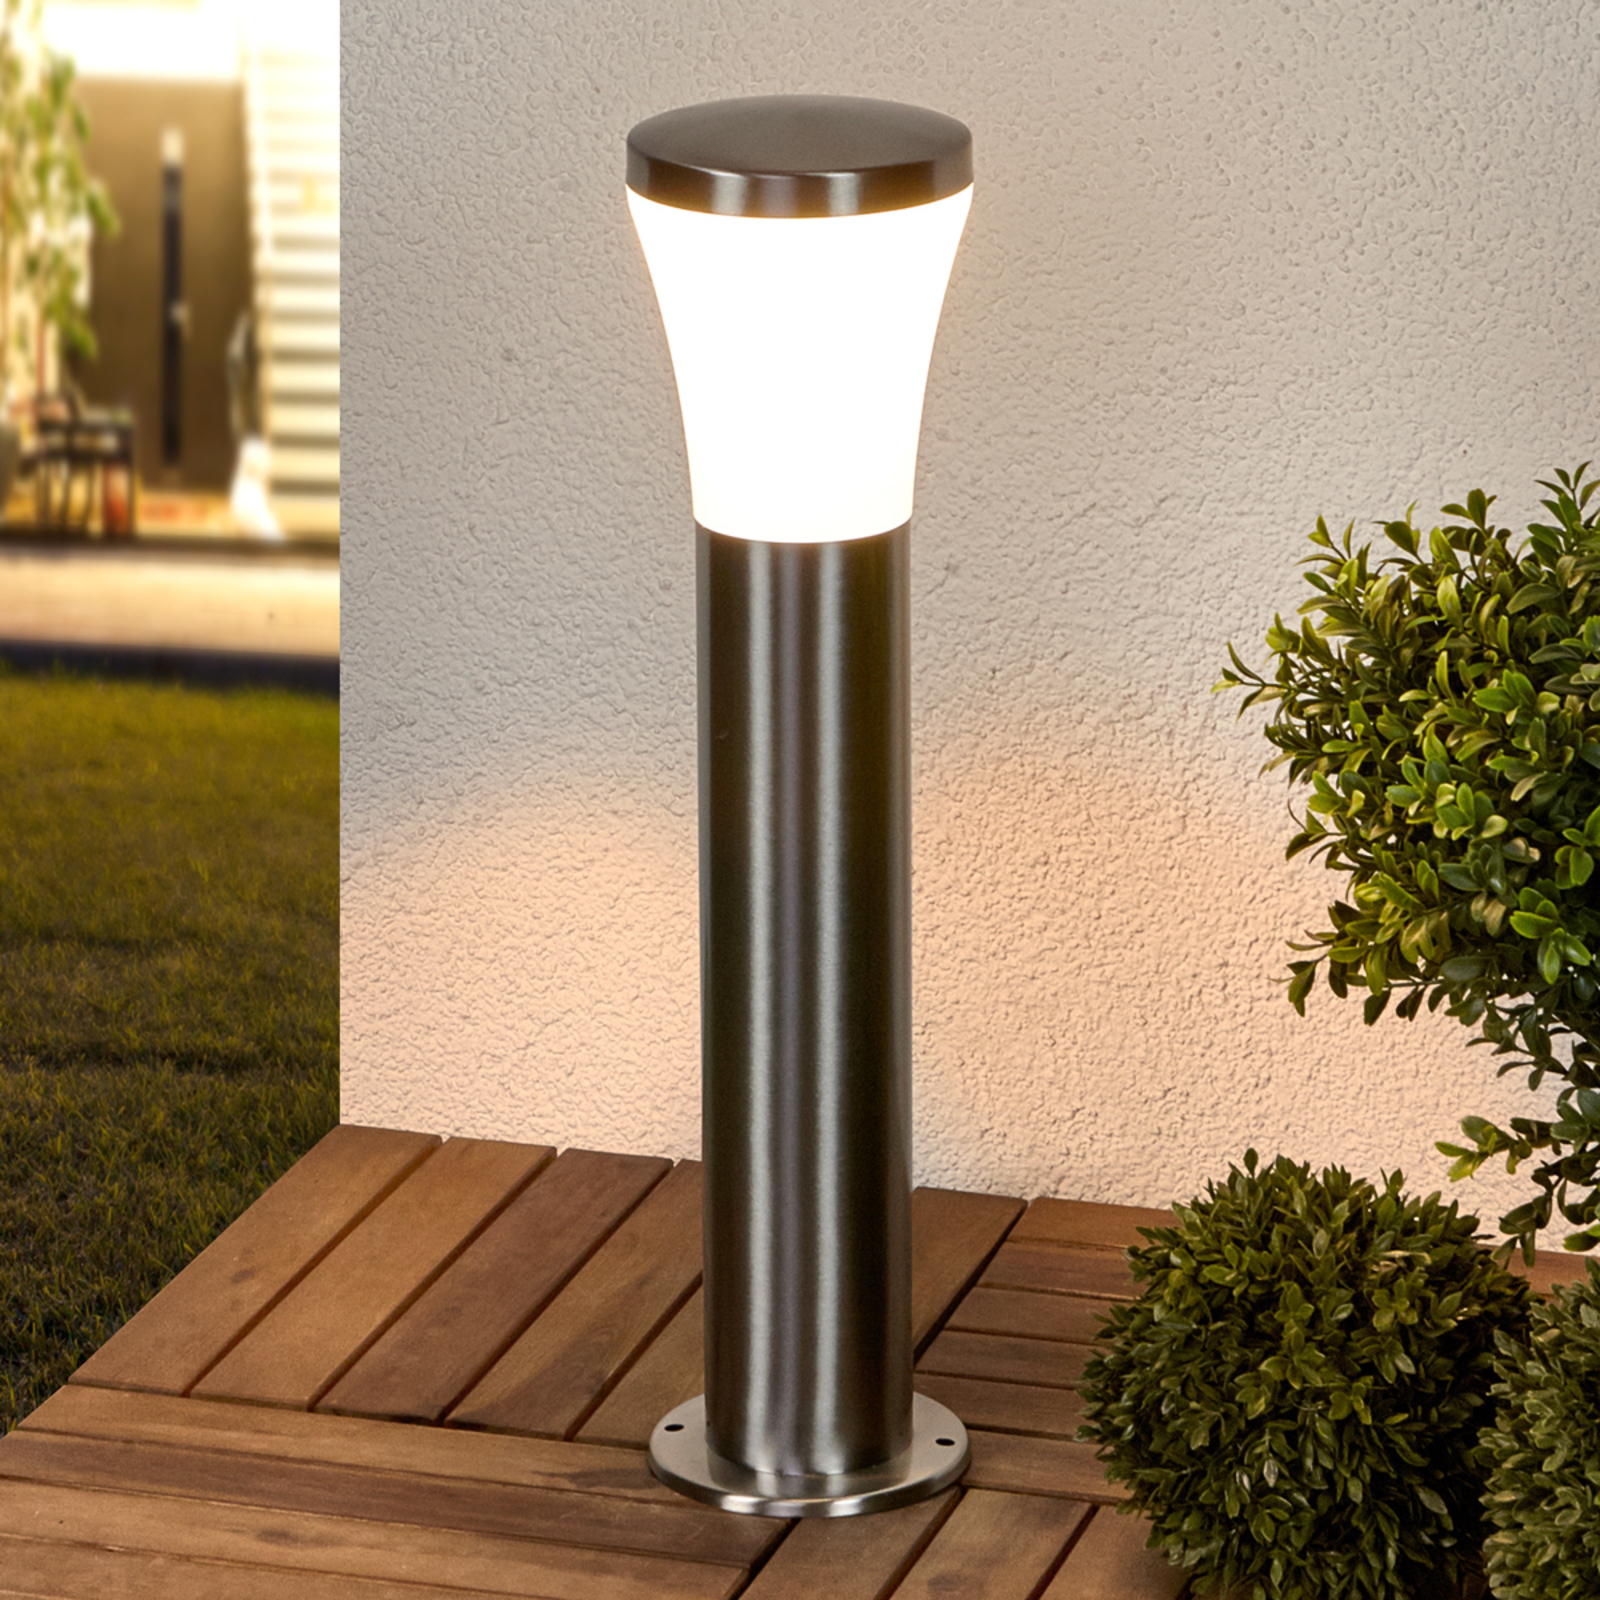 Pillar lamp Sumea with LEDs